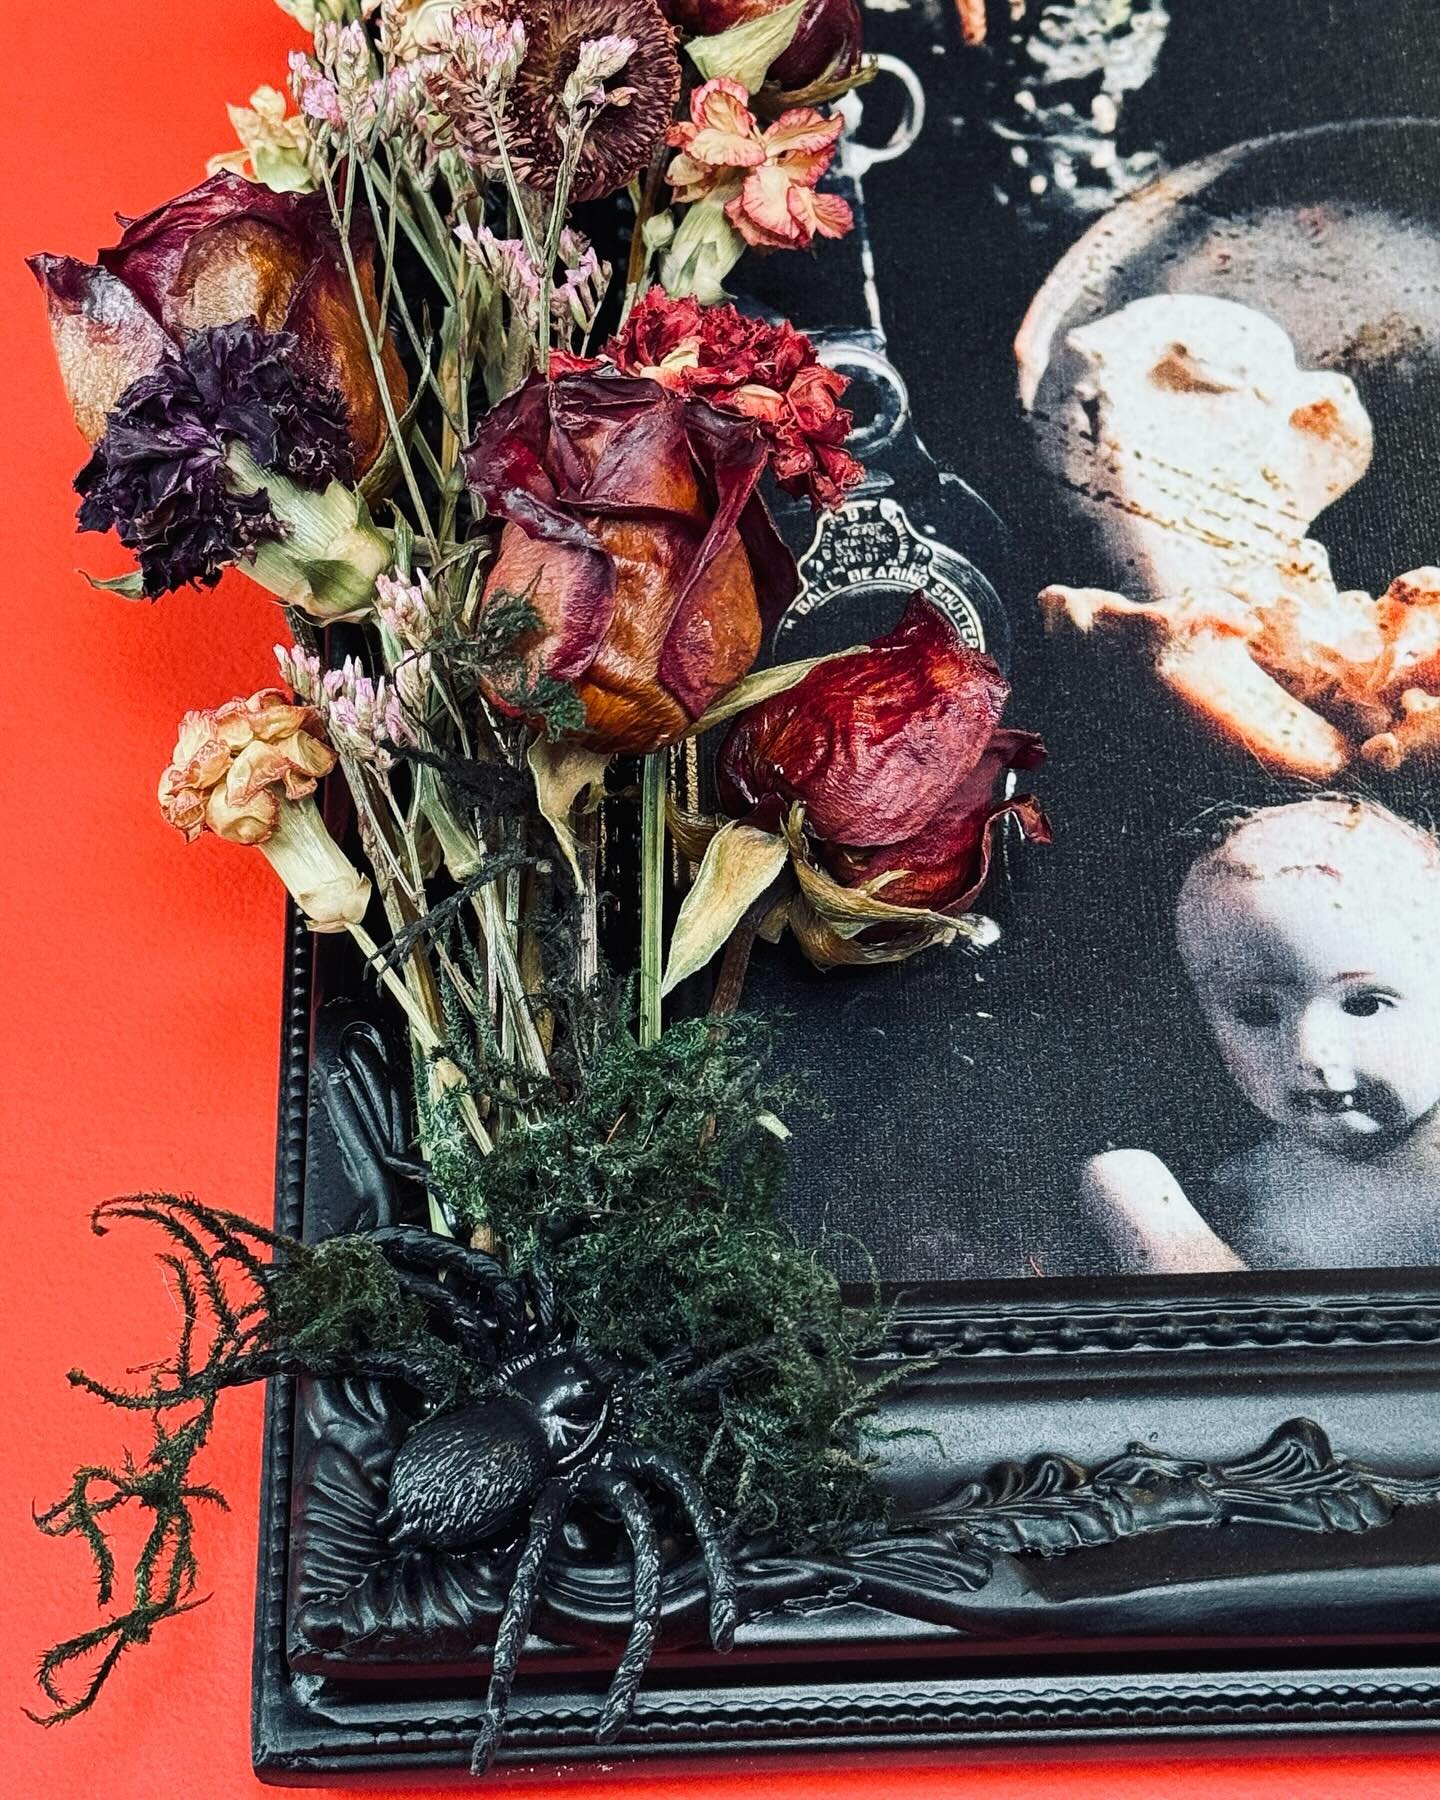 𝐶𝑟𝑒𝑒𝑝𝑦 𝐷𝑜𝑙𝑙 𝐻𝑎𝑛𝑔𝑖𝑛𝑔𝑠 𖨆
ᴱᶻᴹᴱᴿᴬᴸᴰᴬ ᴮᴸᴬᶜᴷ 
вl&sigma;&sigma;m dєc&alpha;ч ғraмe⁂
www.Ezmeraldablack.com 
 ☽ᐁ&there4;ꪉ𖠋  ᵖʰᵒᵗᵒᵍ @cevet_jones 
#victorian #creepydoll #deadflowers #asteticphotography #haunted #witches #twinflame  #twinfl